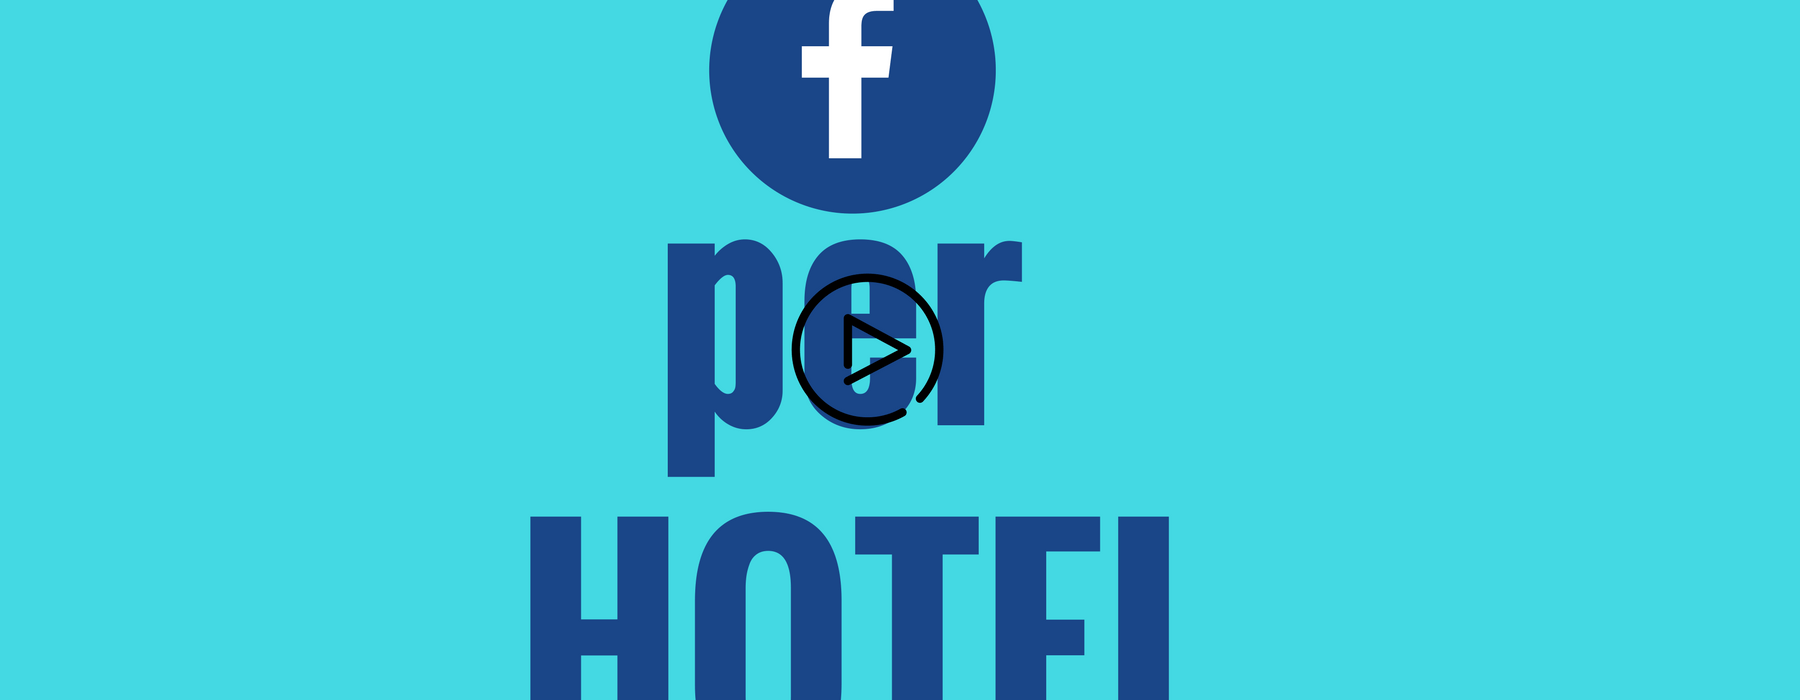 facebook-per-hote-blog-mycomp